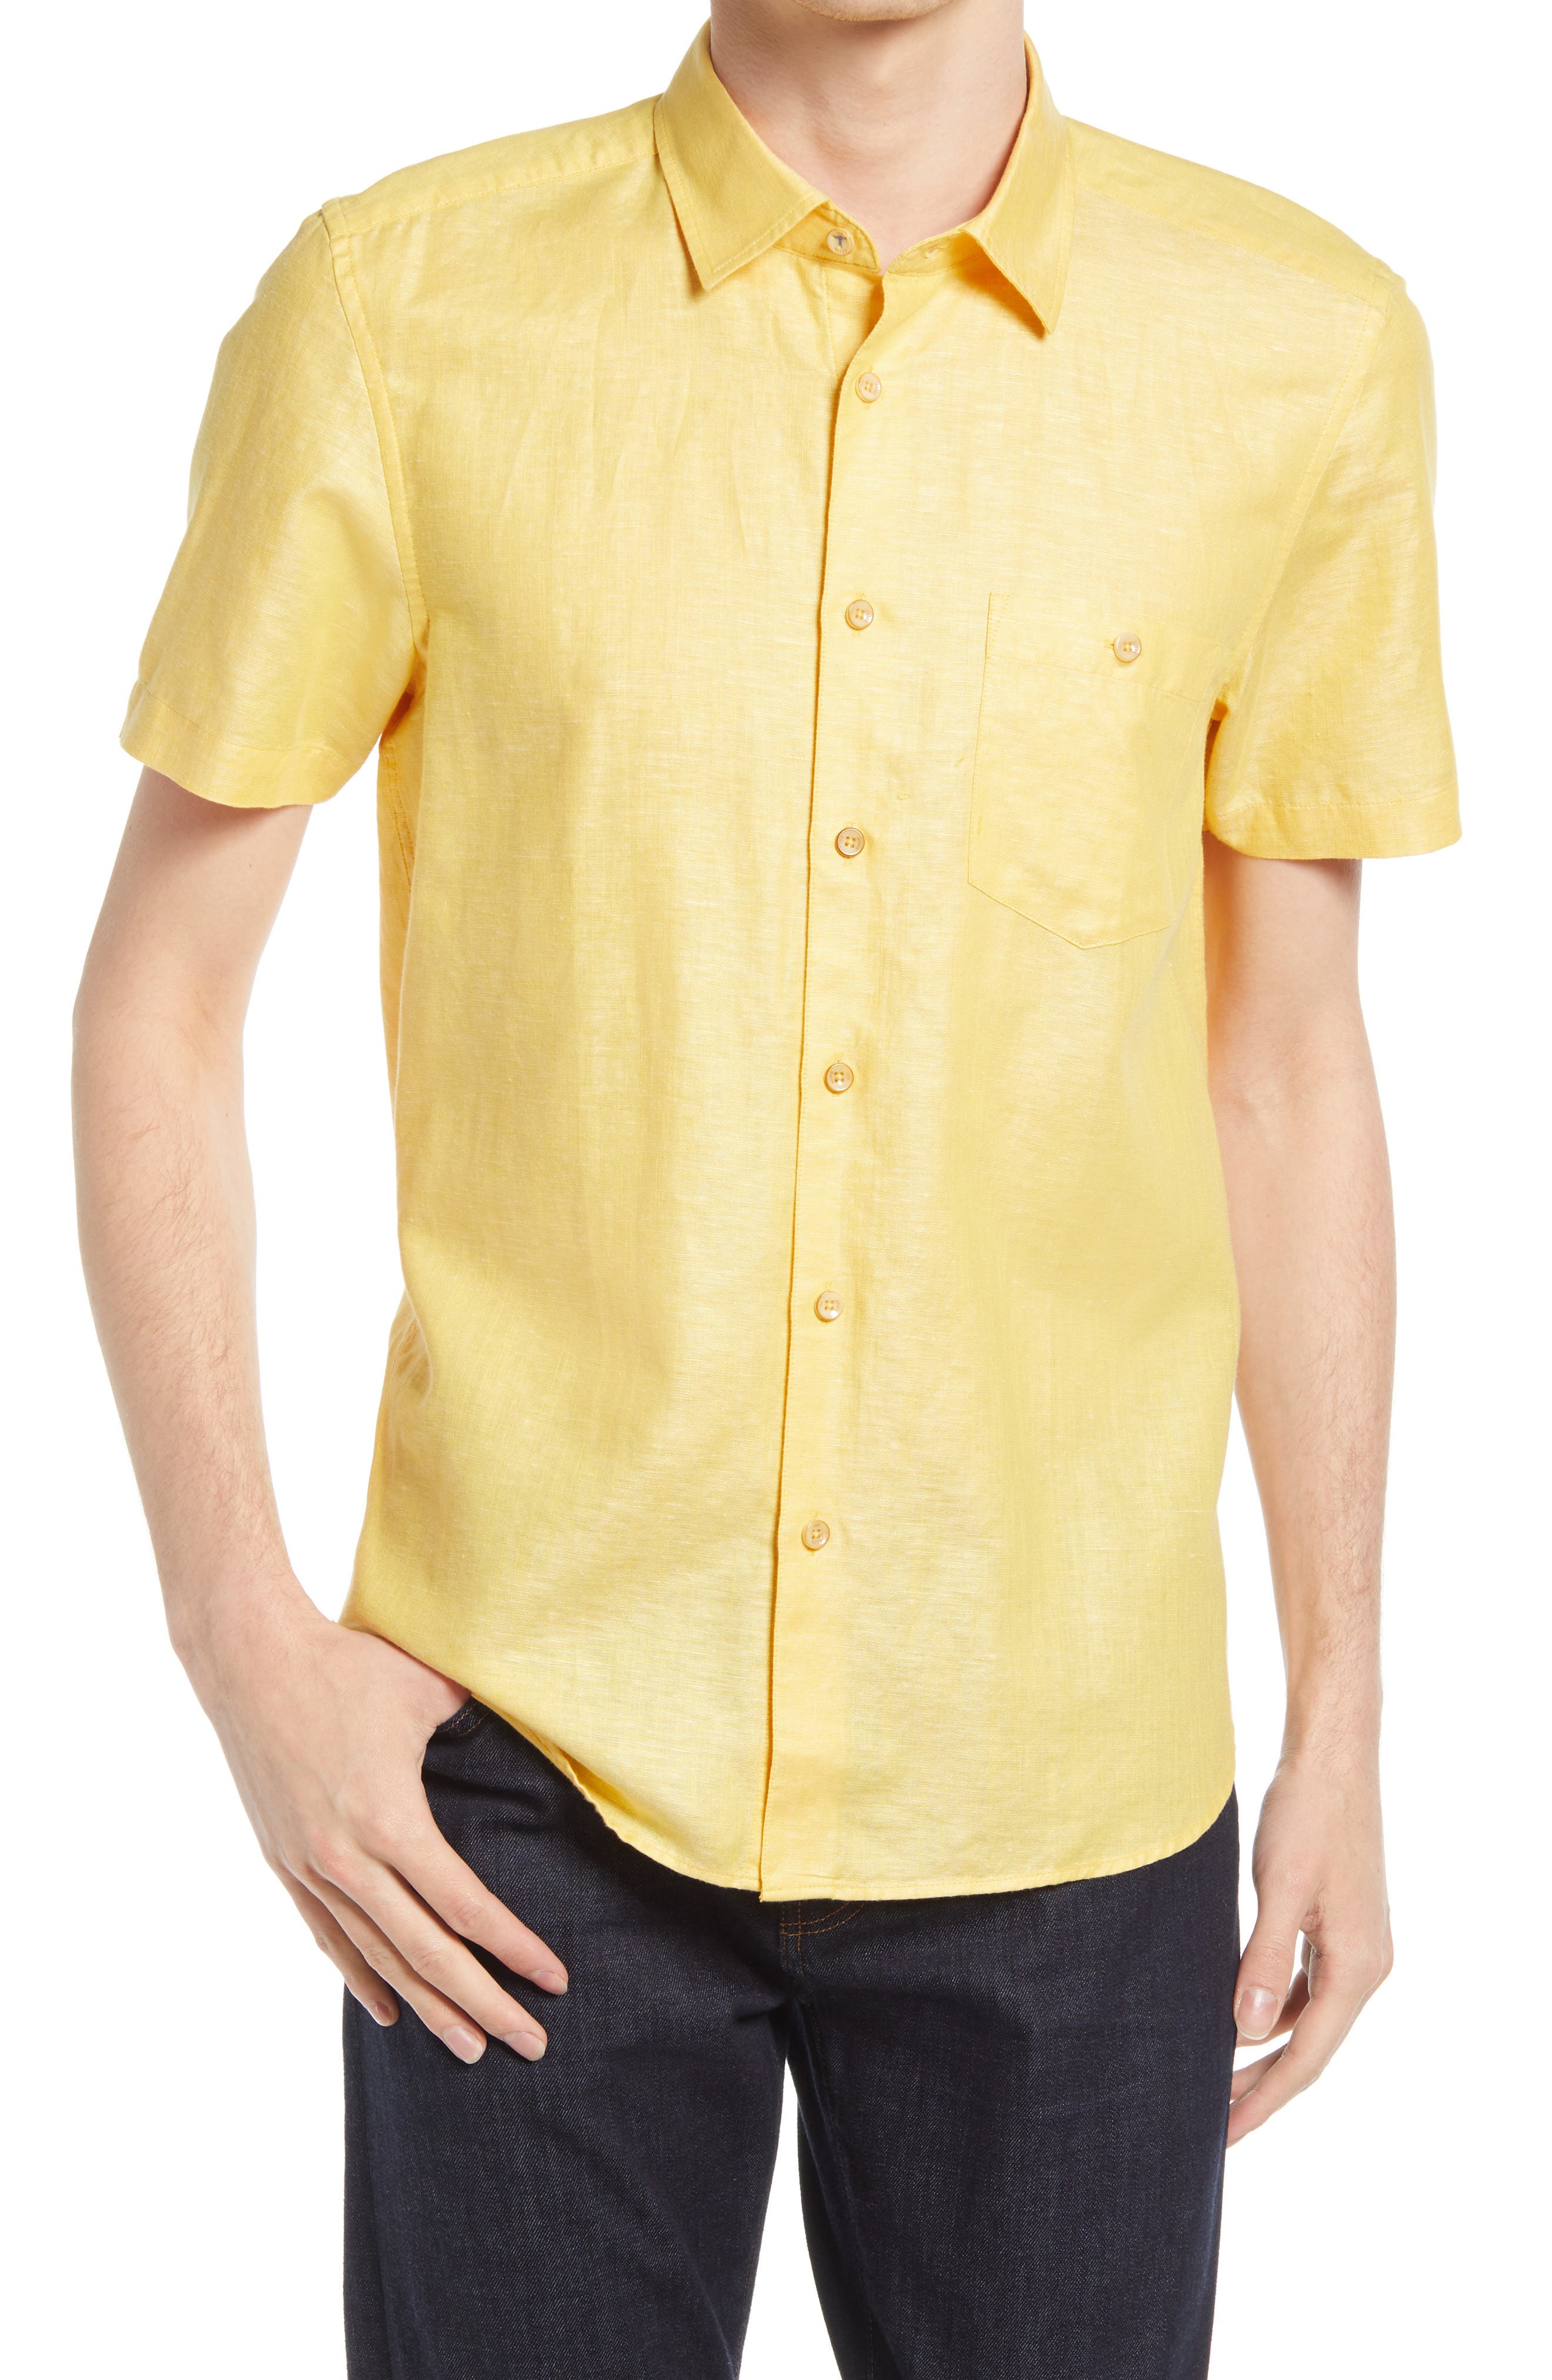 Men's Yellow Button Up Shirts ...